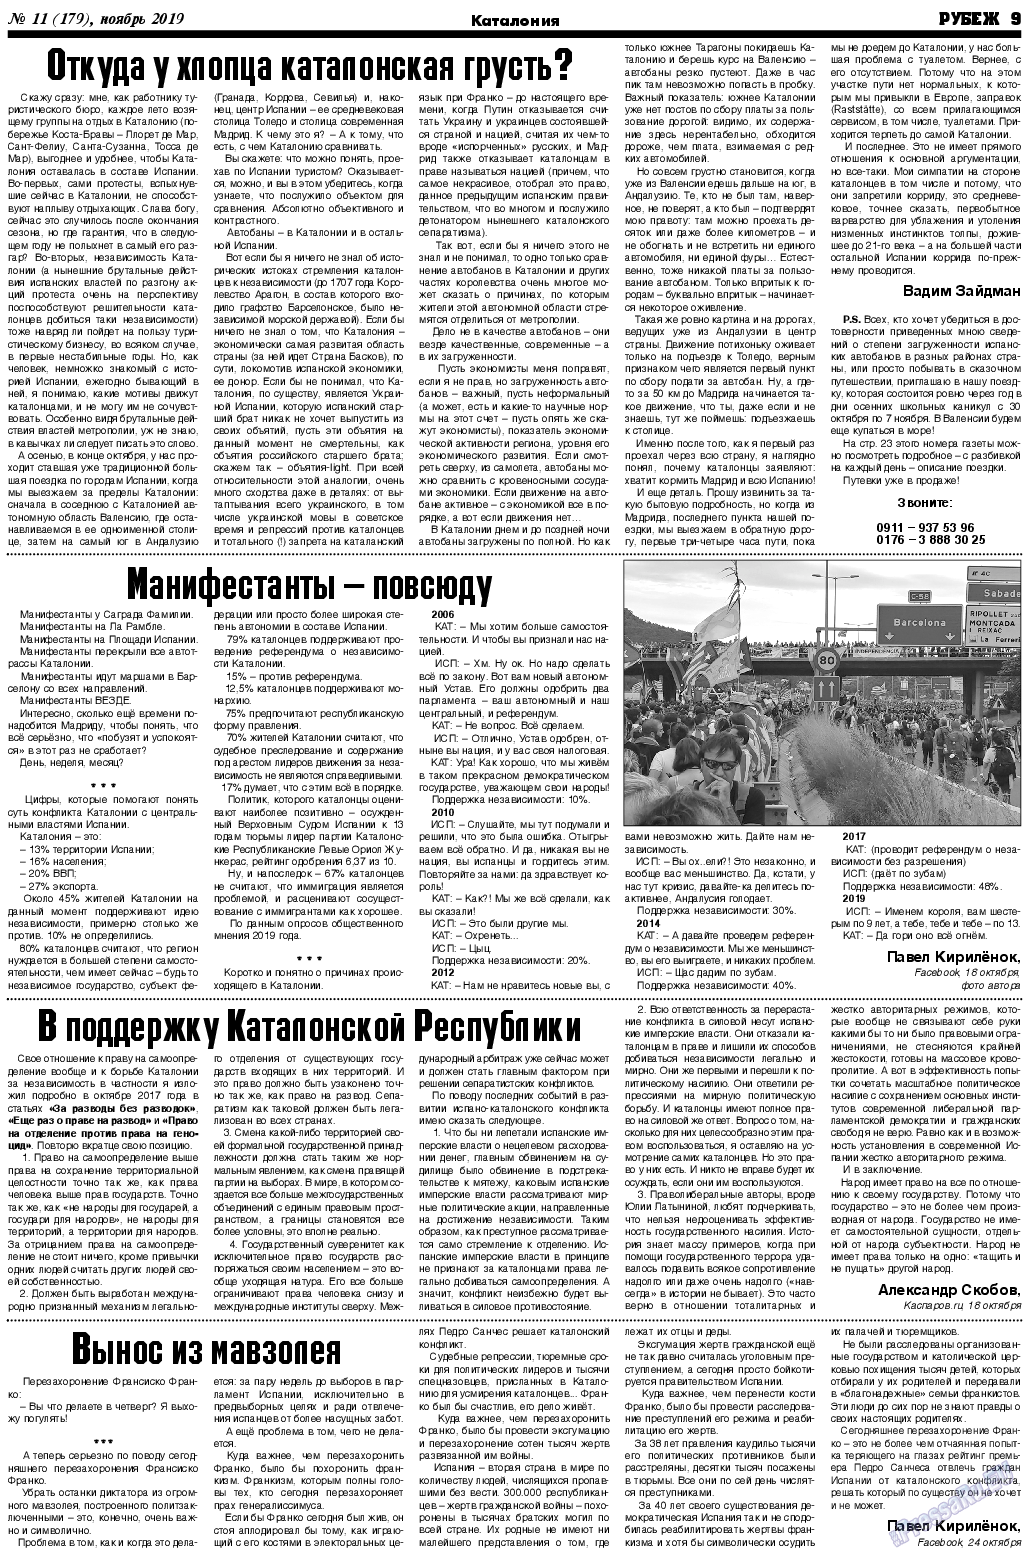 Рубеж, газета. 2019 №11 стр.9